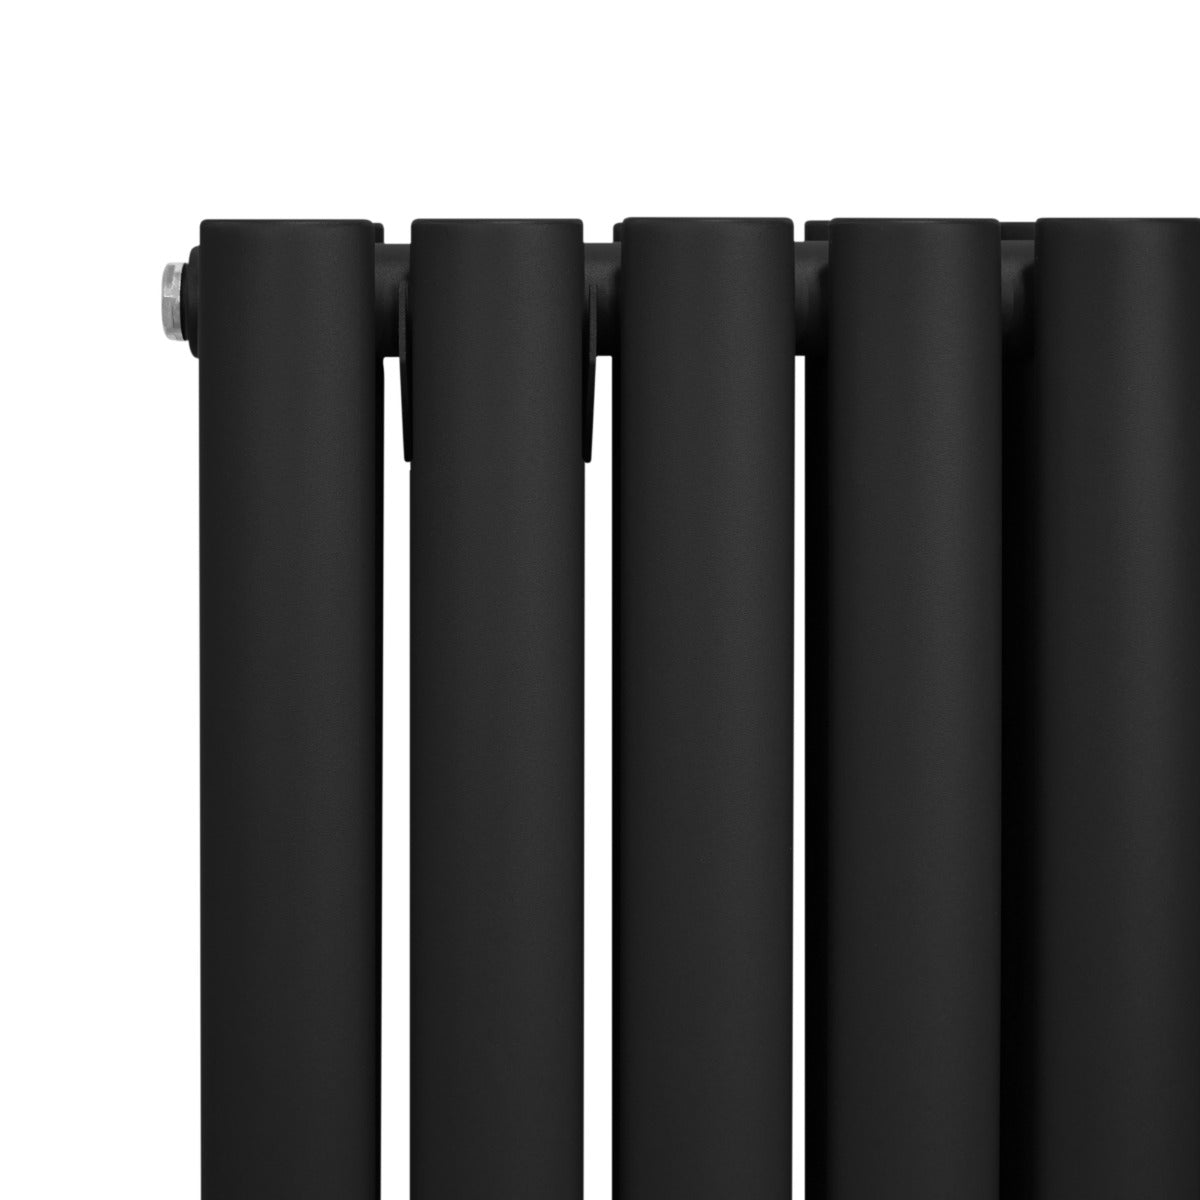 Oval Column Radiator – 1600mm x 600mm – Black